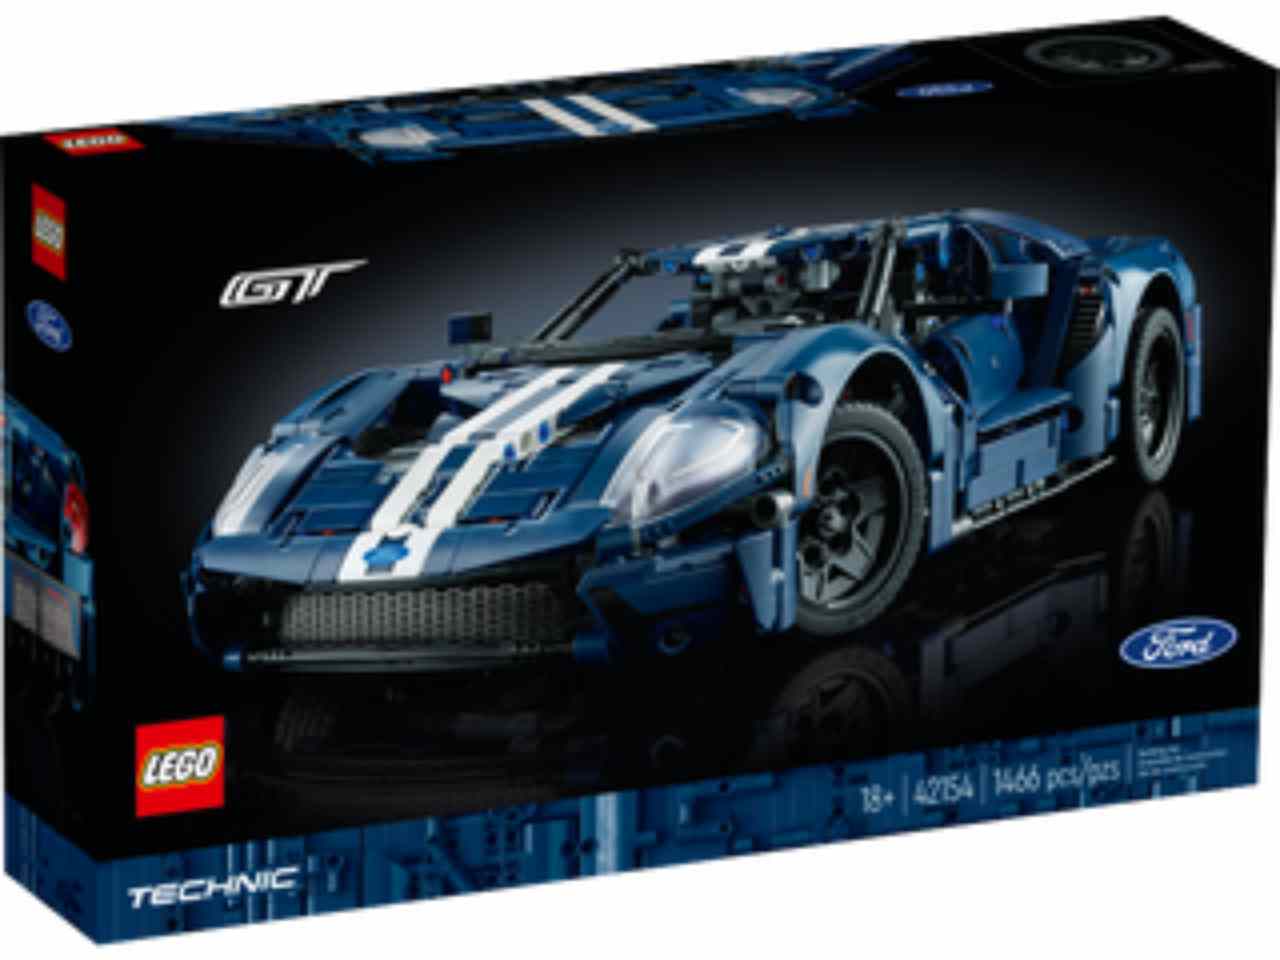 Ford GT Lego Technic